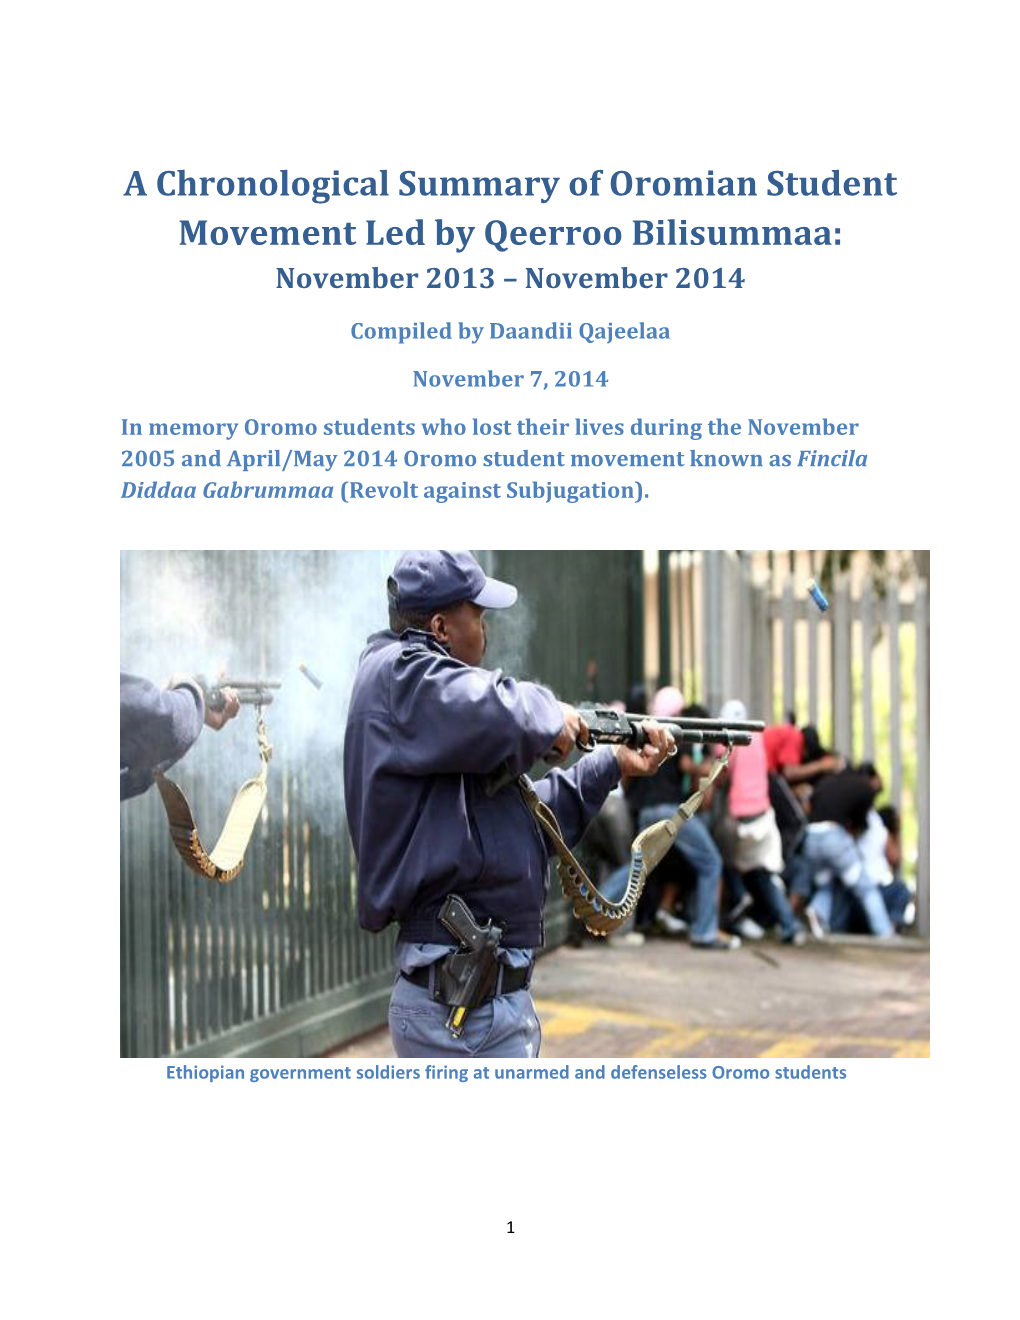 A Chronological Summary of Oromian Student Movement Led by Qeerroo Bilisummaa: November 2013 – November 2014